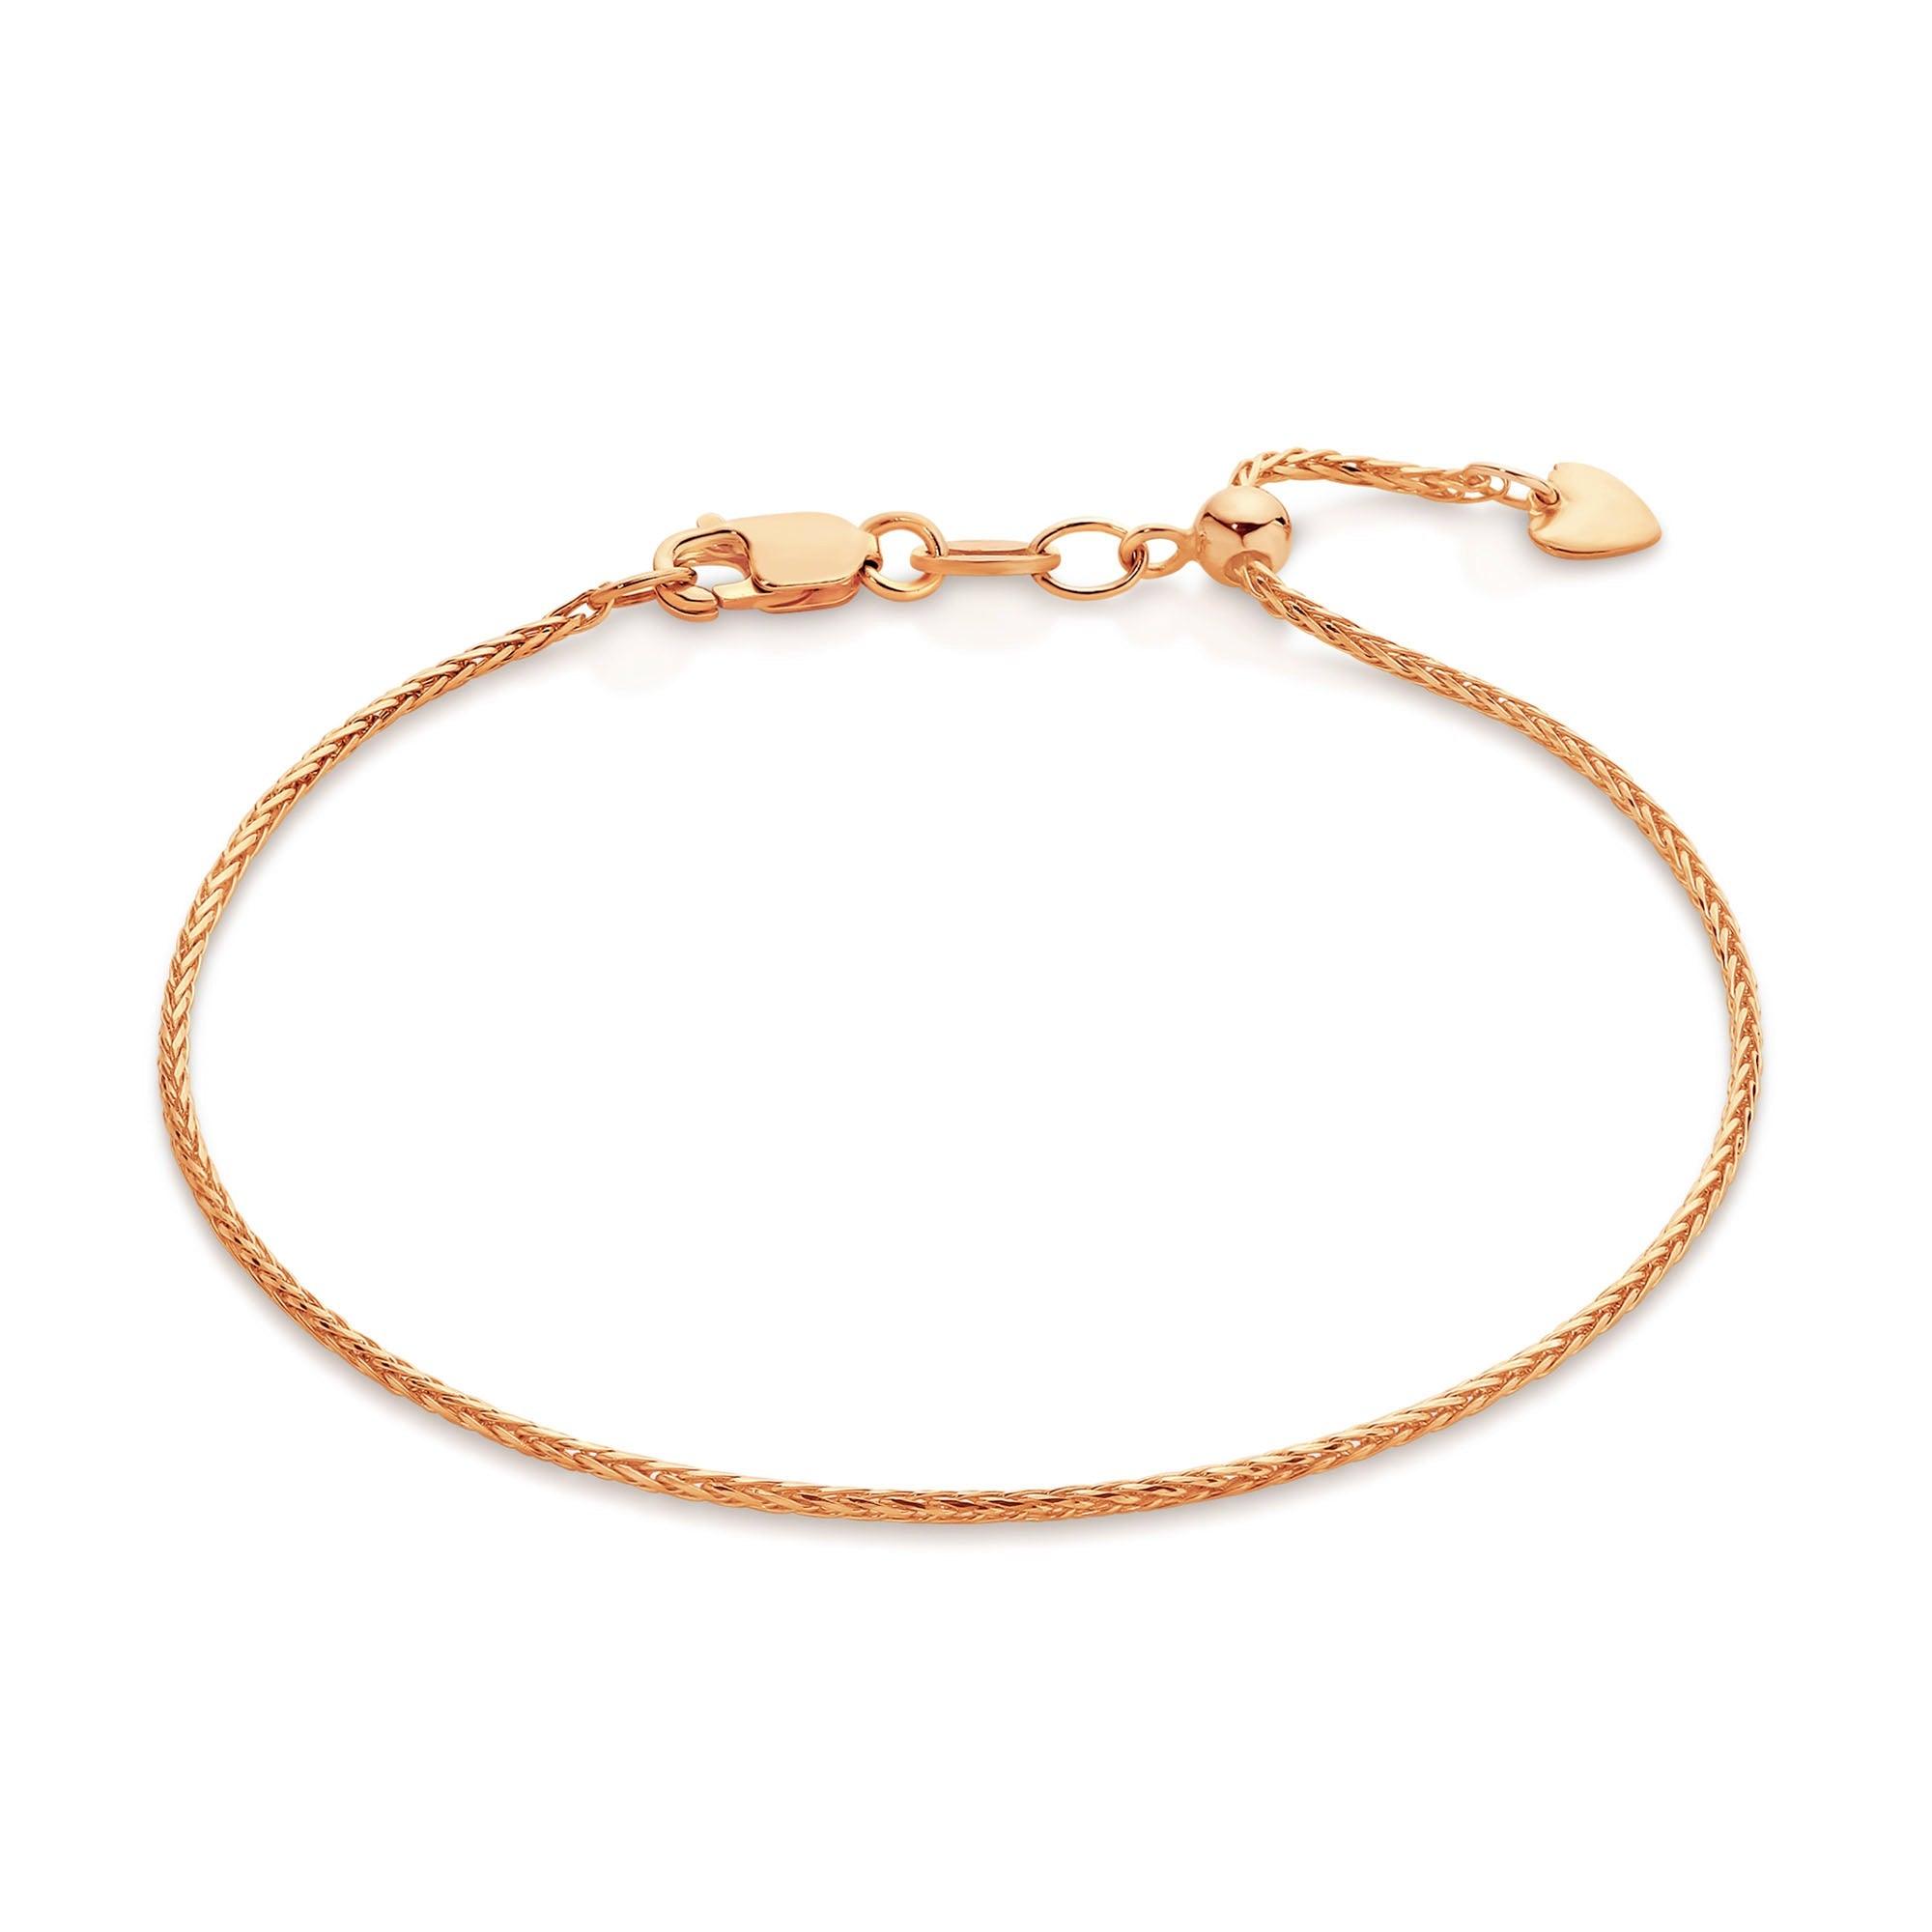 Lanciano Rose Gold Adjustable 1.2mm Magic Wheat Link Bracelet, 22cm Length - Monroe Yorke Diamonds